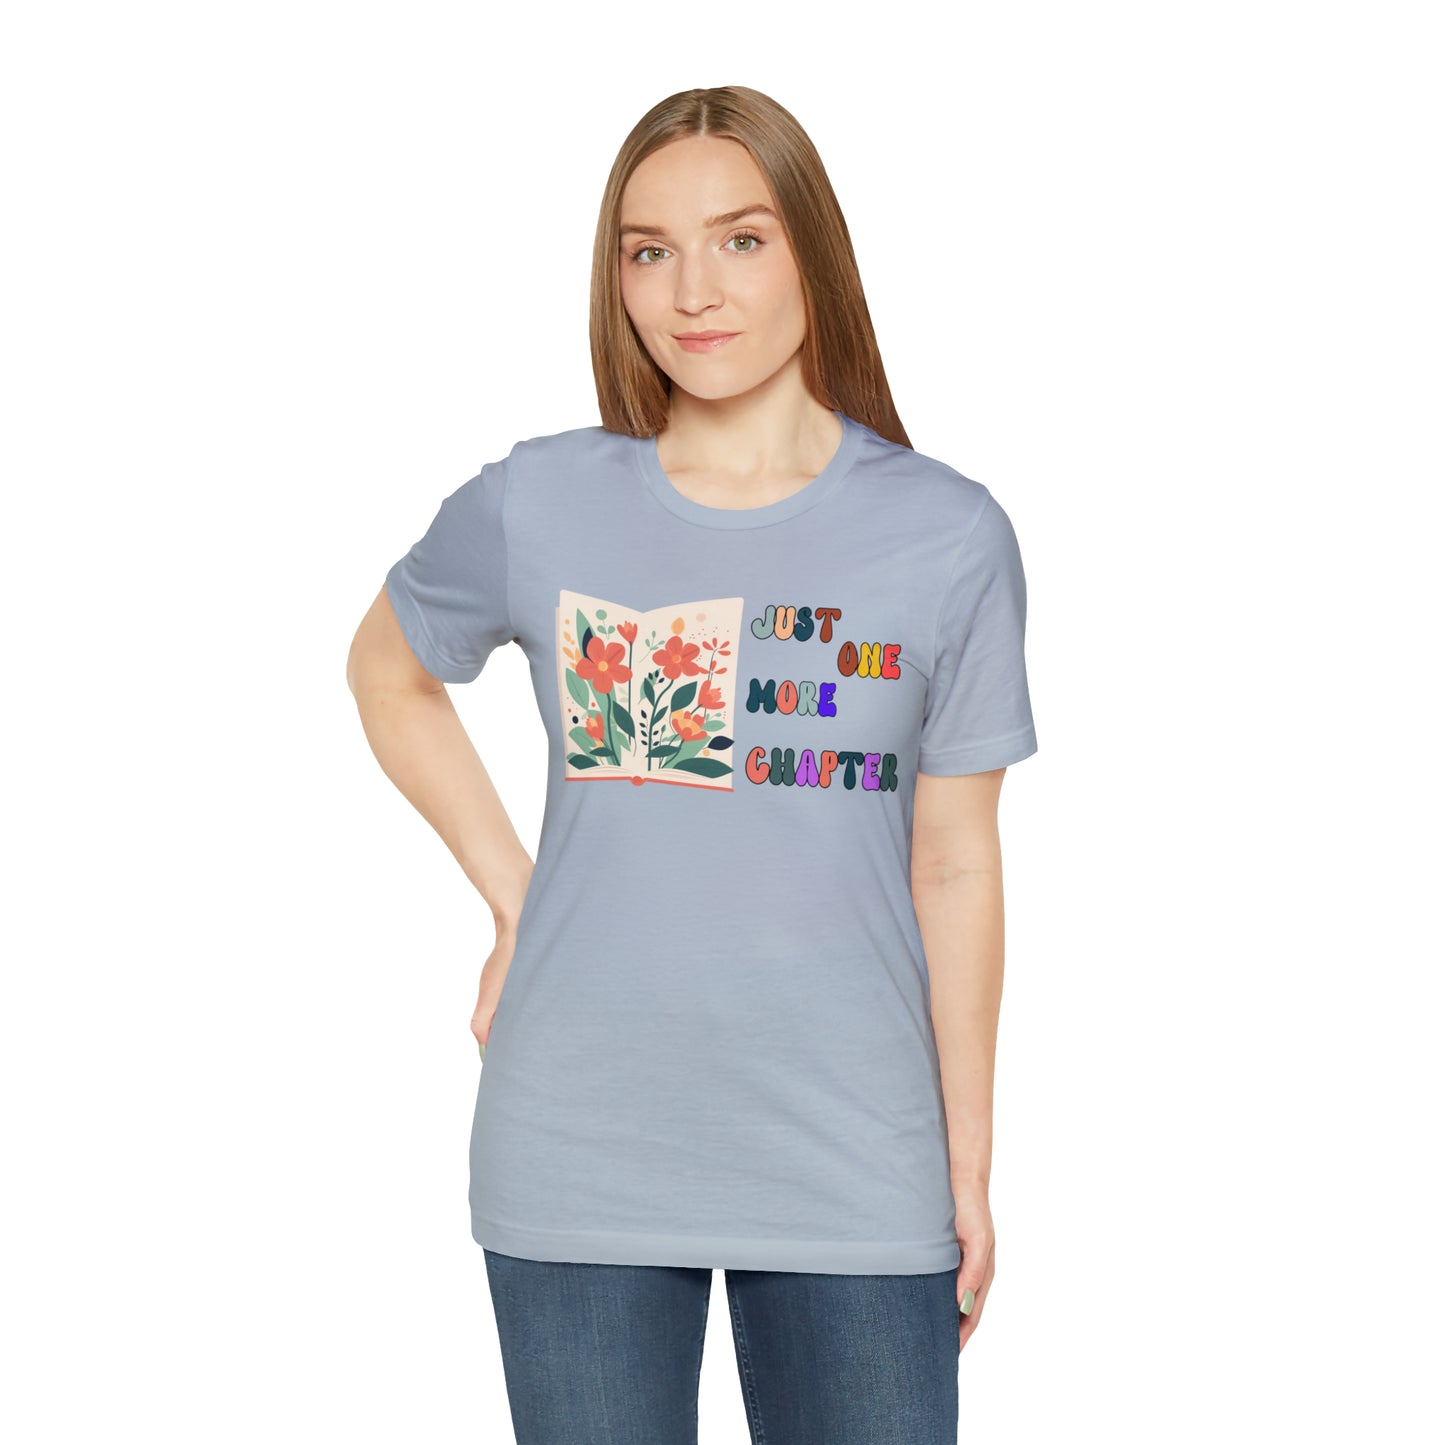 Bookworm Shirt, Bookish Shirt, Funny Reading Shirt, Book Nerd Shirt, Librarian Shirt, Reader Shirt, Read Shirt For Women, T175